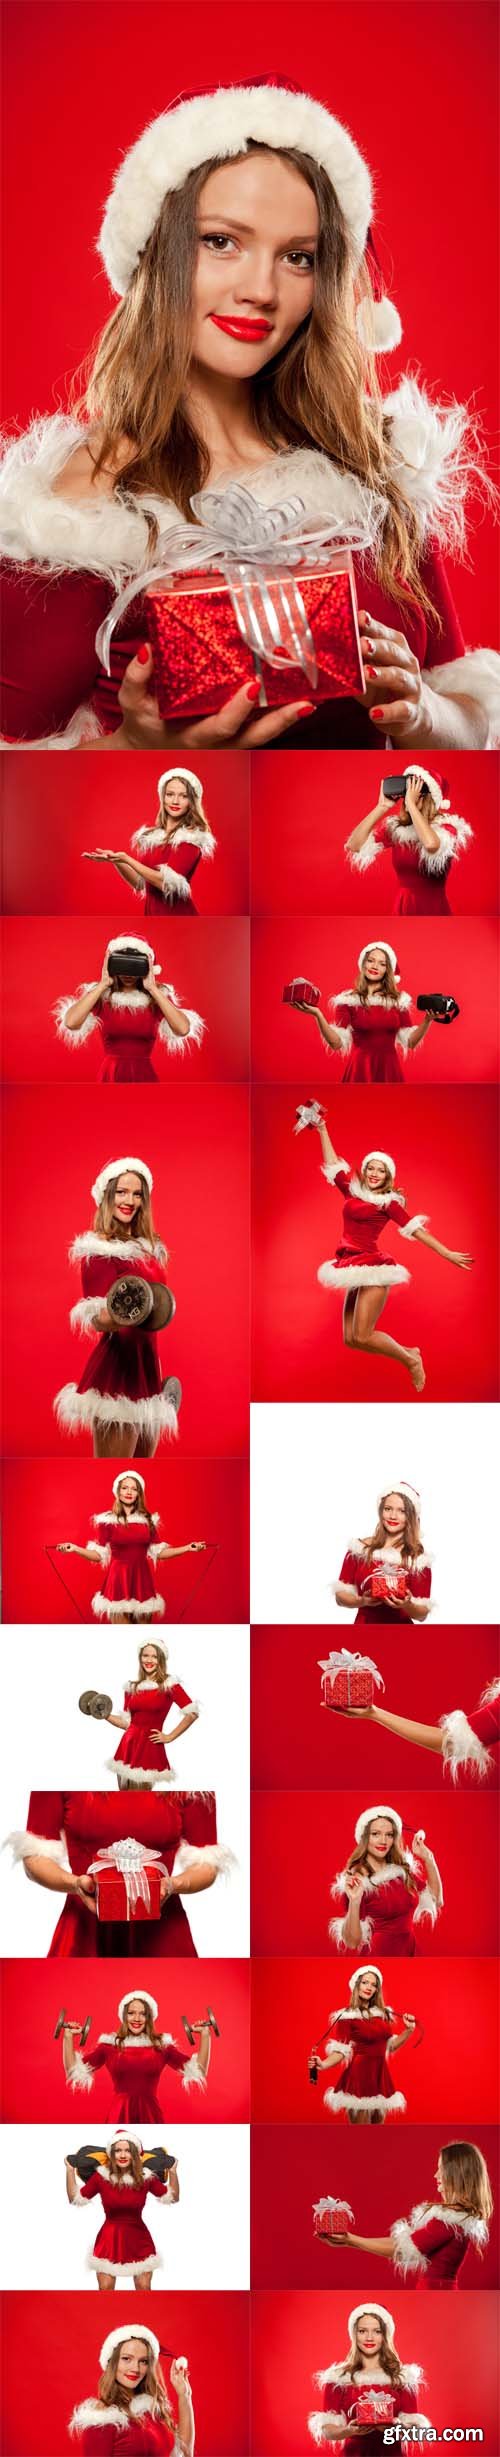 Photo Set - Christmas, x-mas, winter, happiness concept woman in santa helper